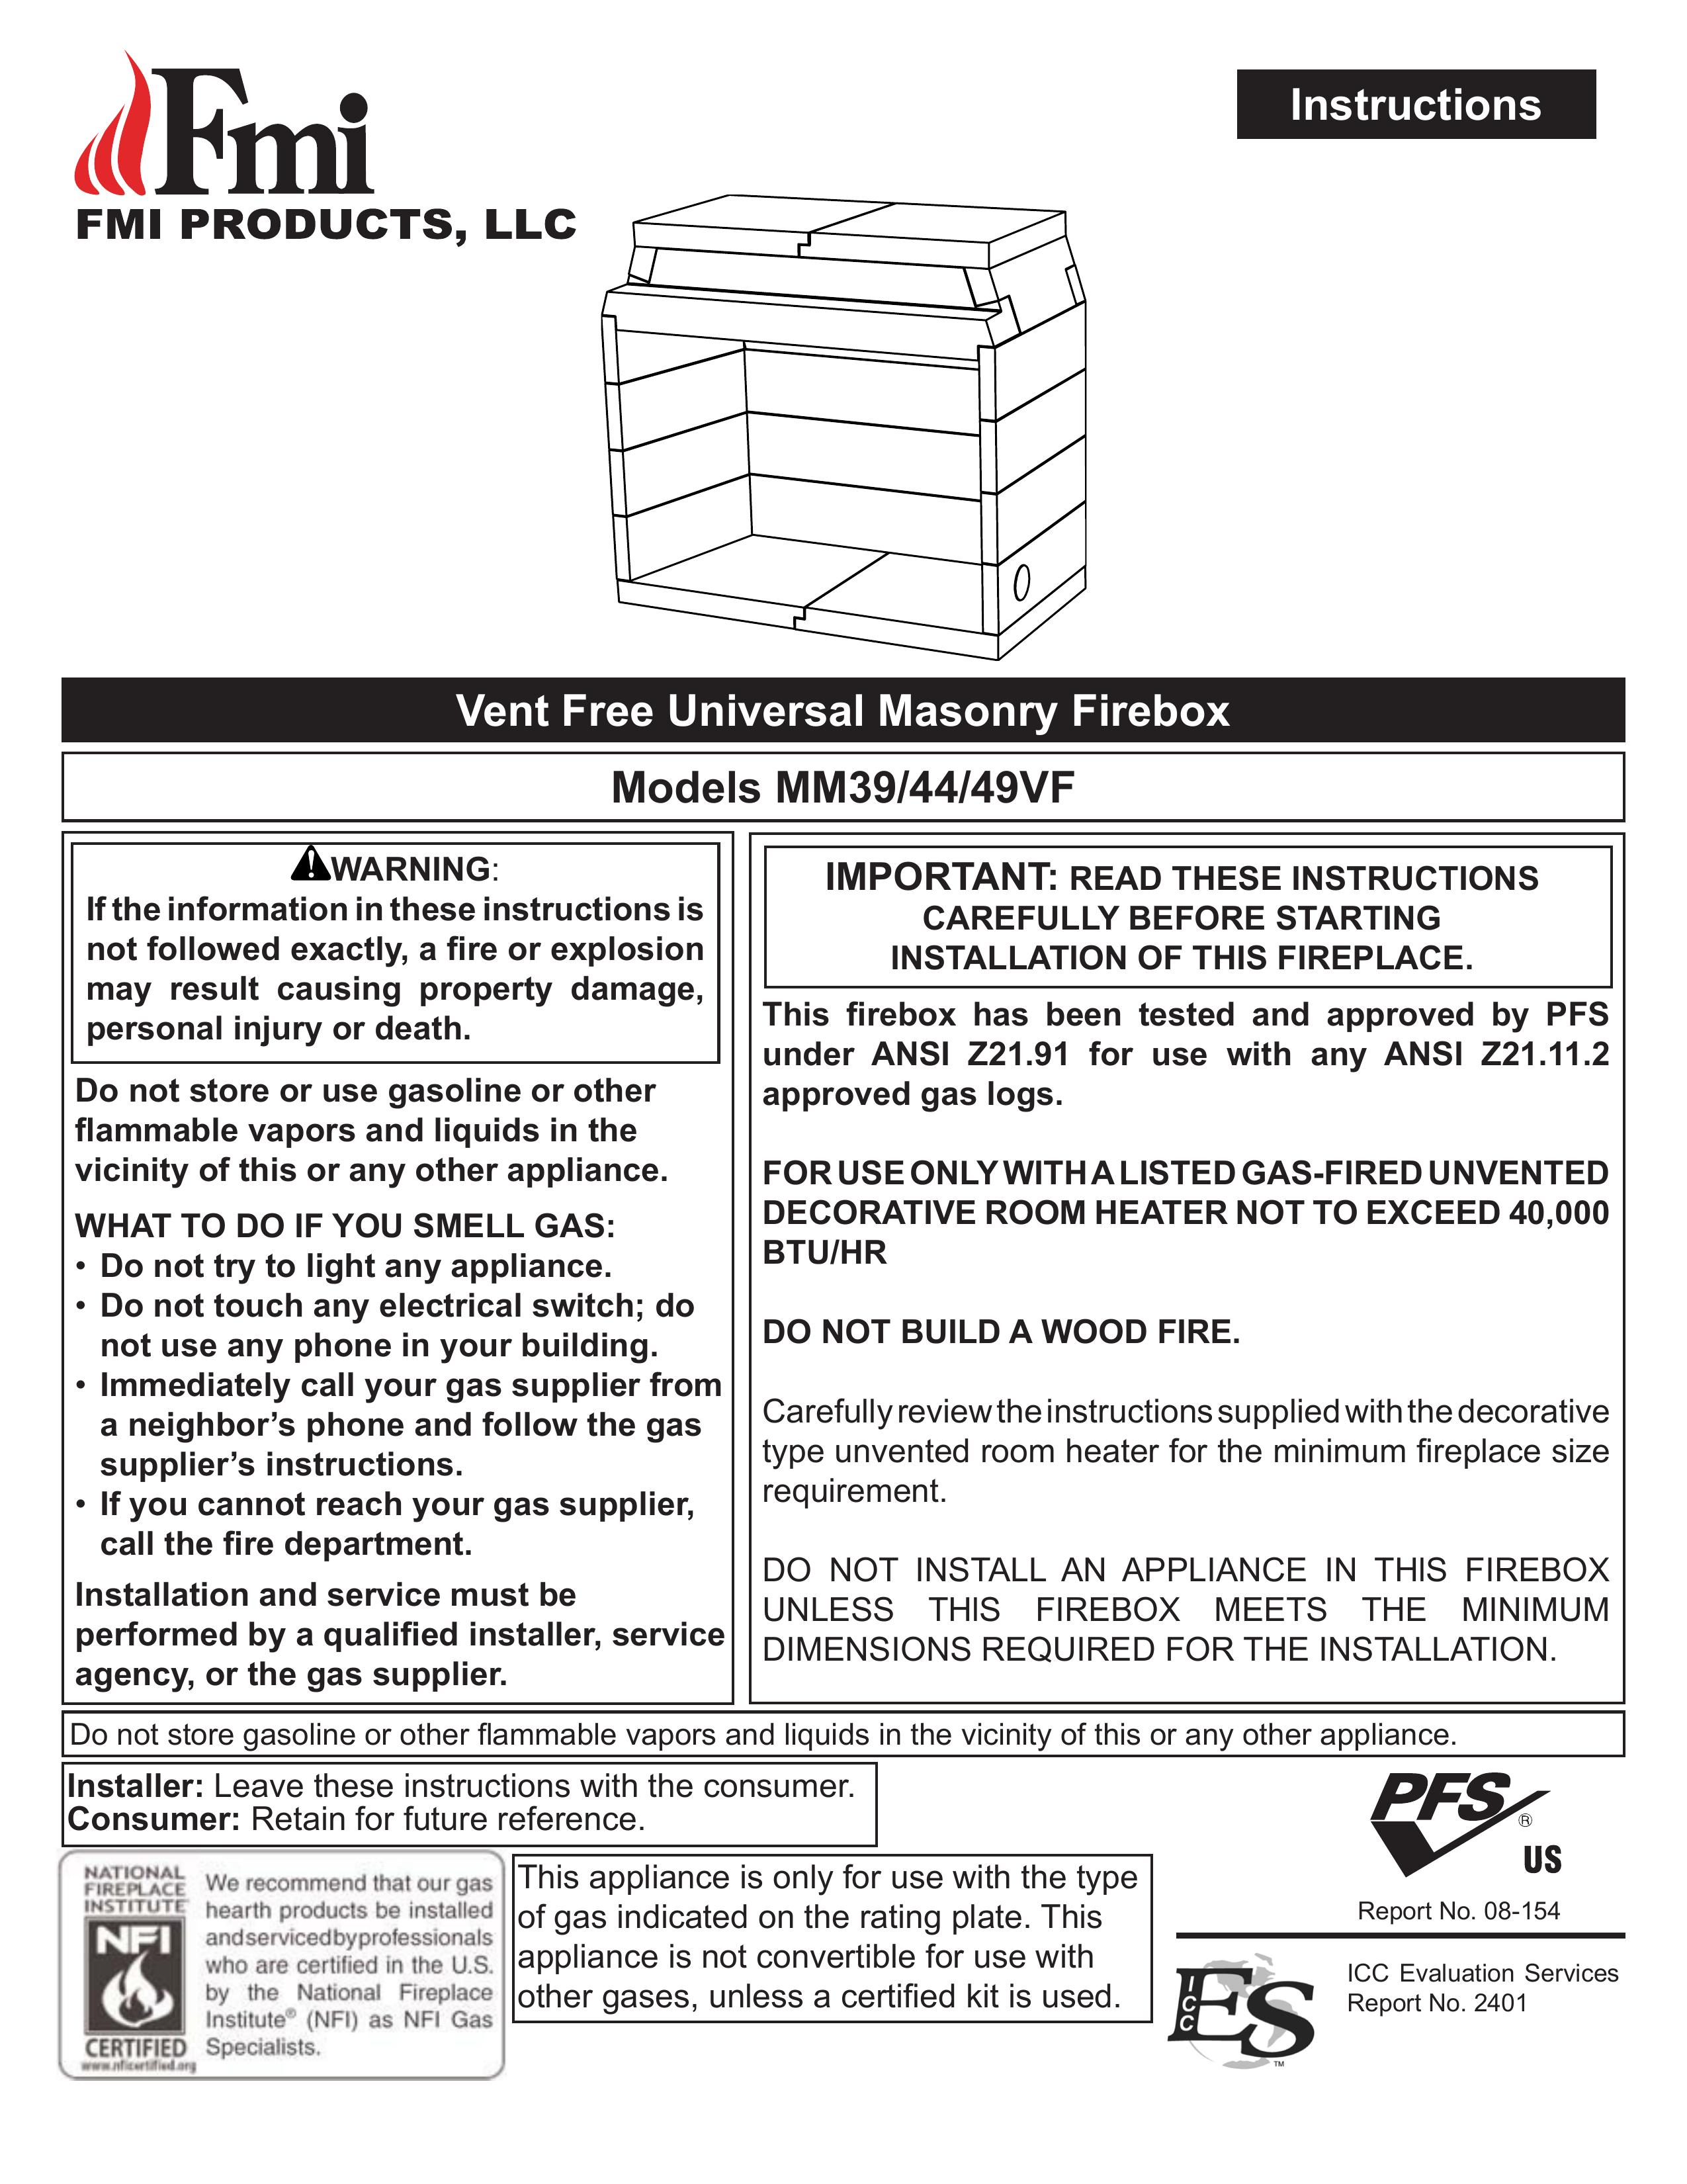 FMI MM39/44/49VF Outdoor Fireplace User Manual